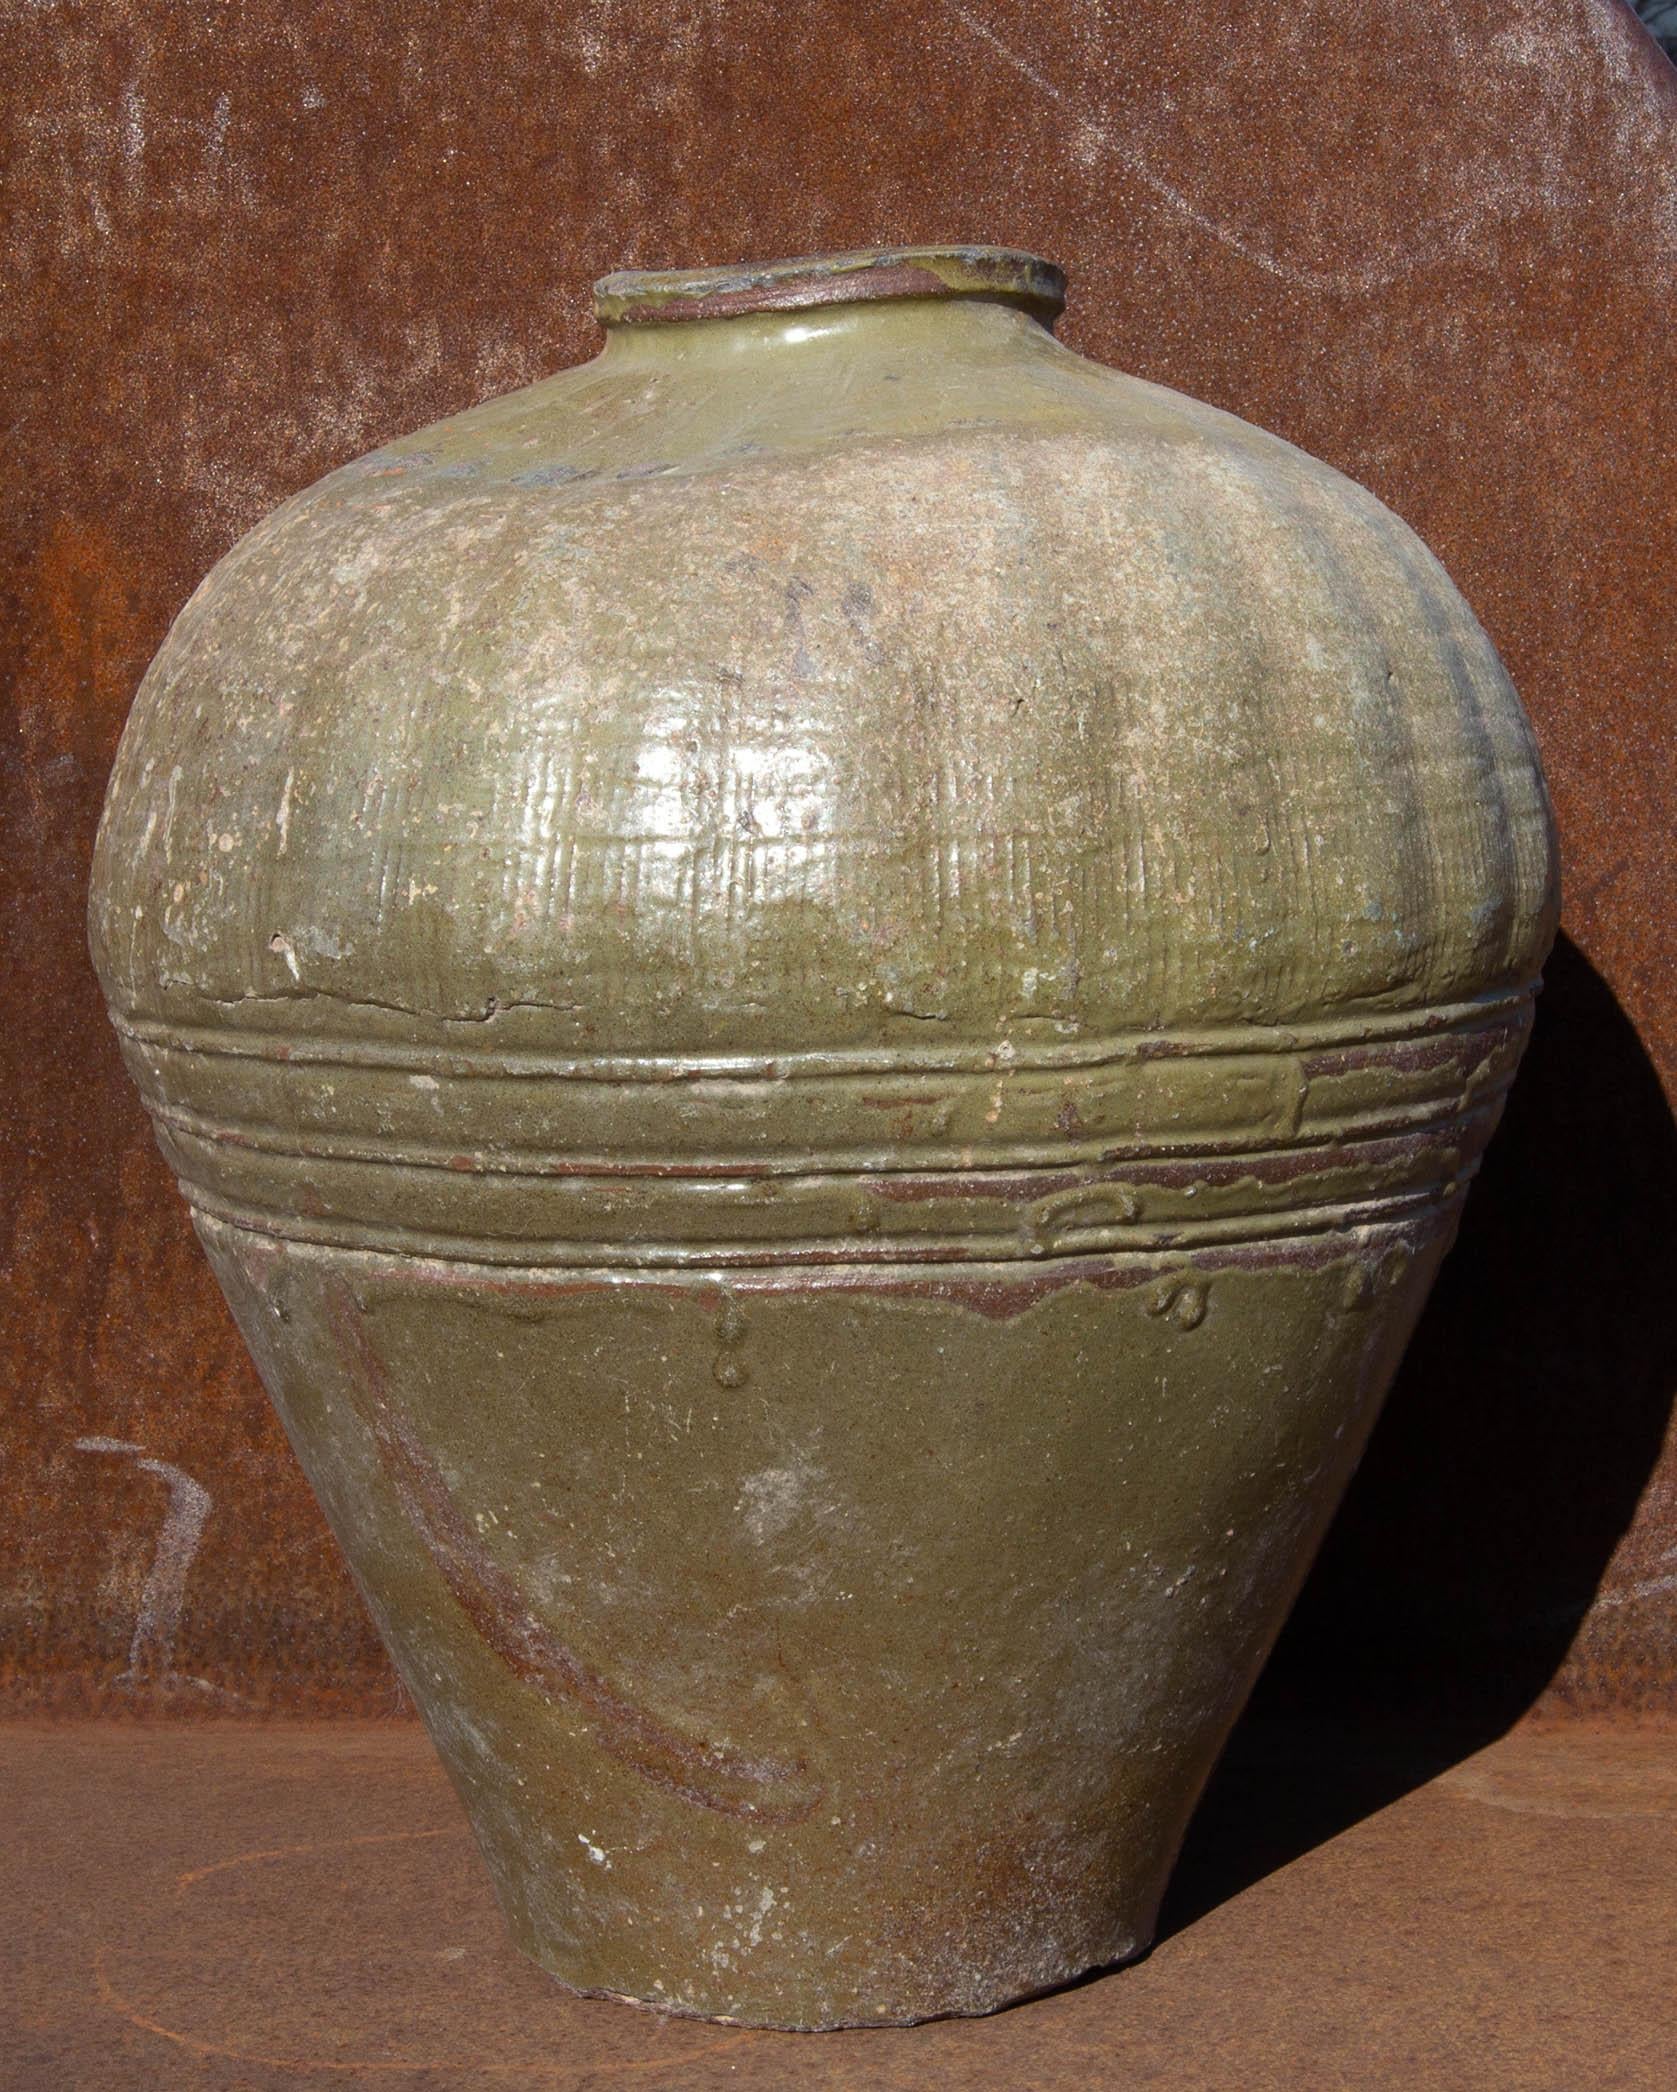 Glazed terracotta rice wine storage jar. China, early 20th century.